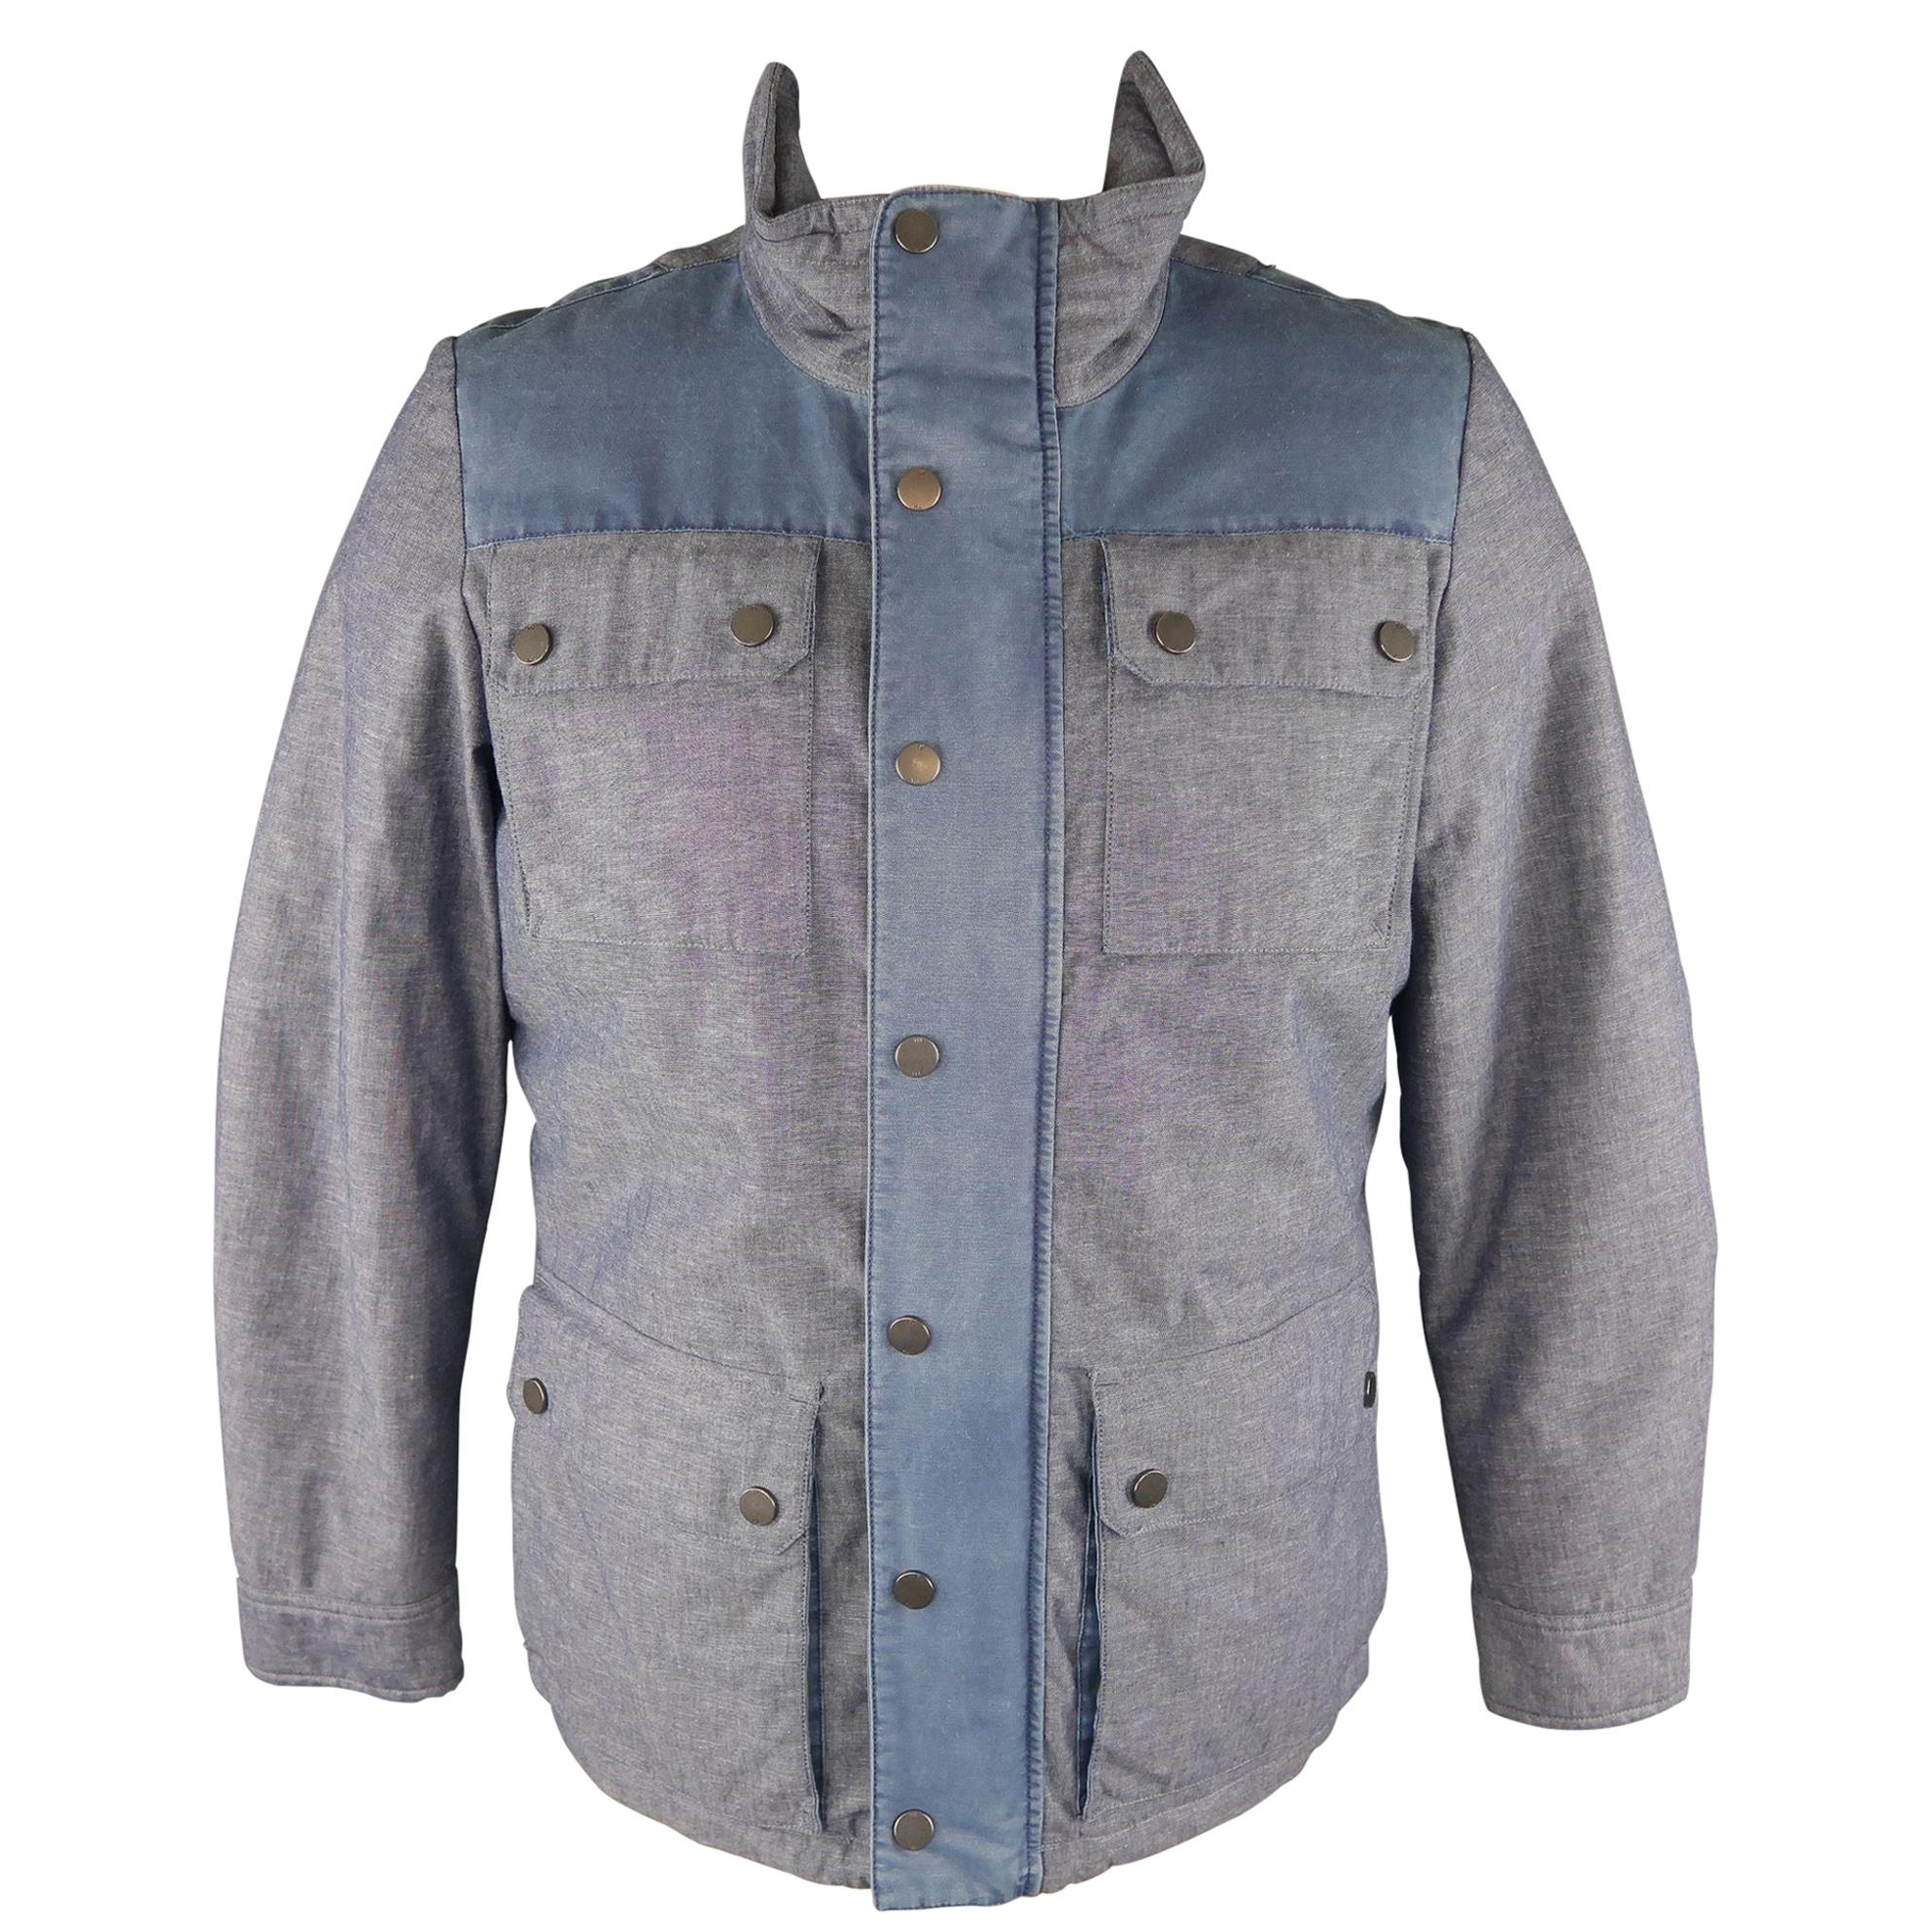 TOMMY HILFIGER M Blue Cotton / Linen Jacket